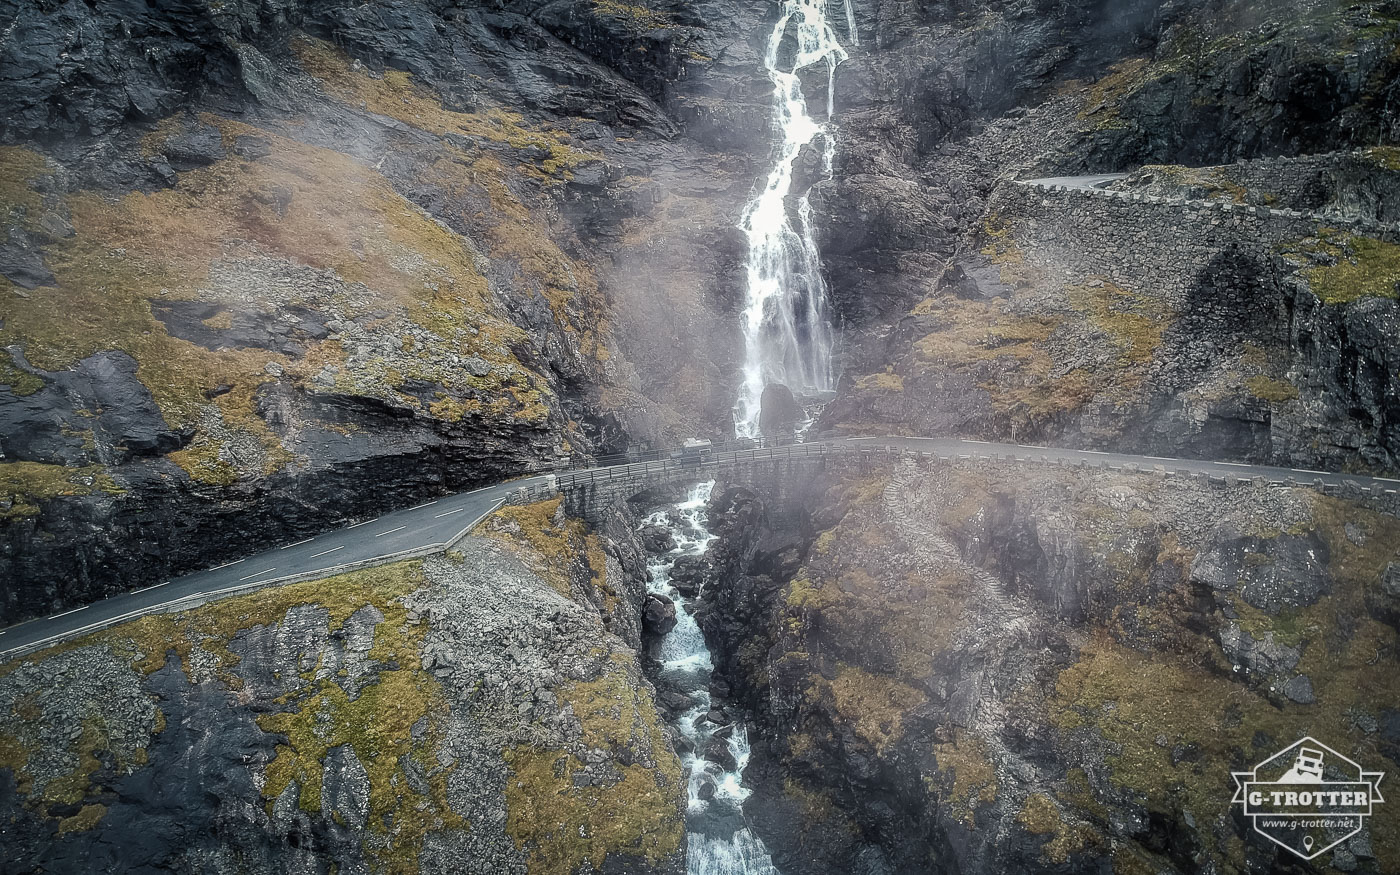 The spray of the waterfall engulfs the G on the Trollstigen.